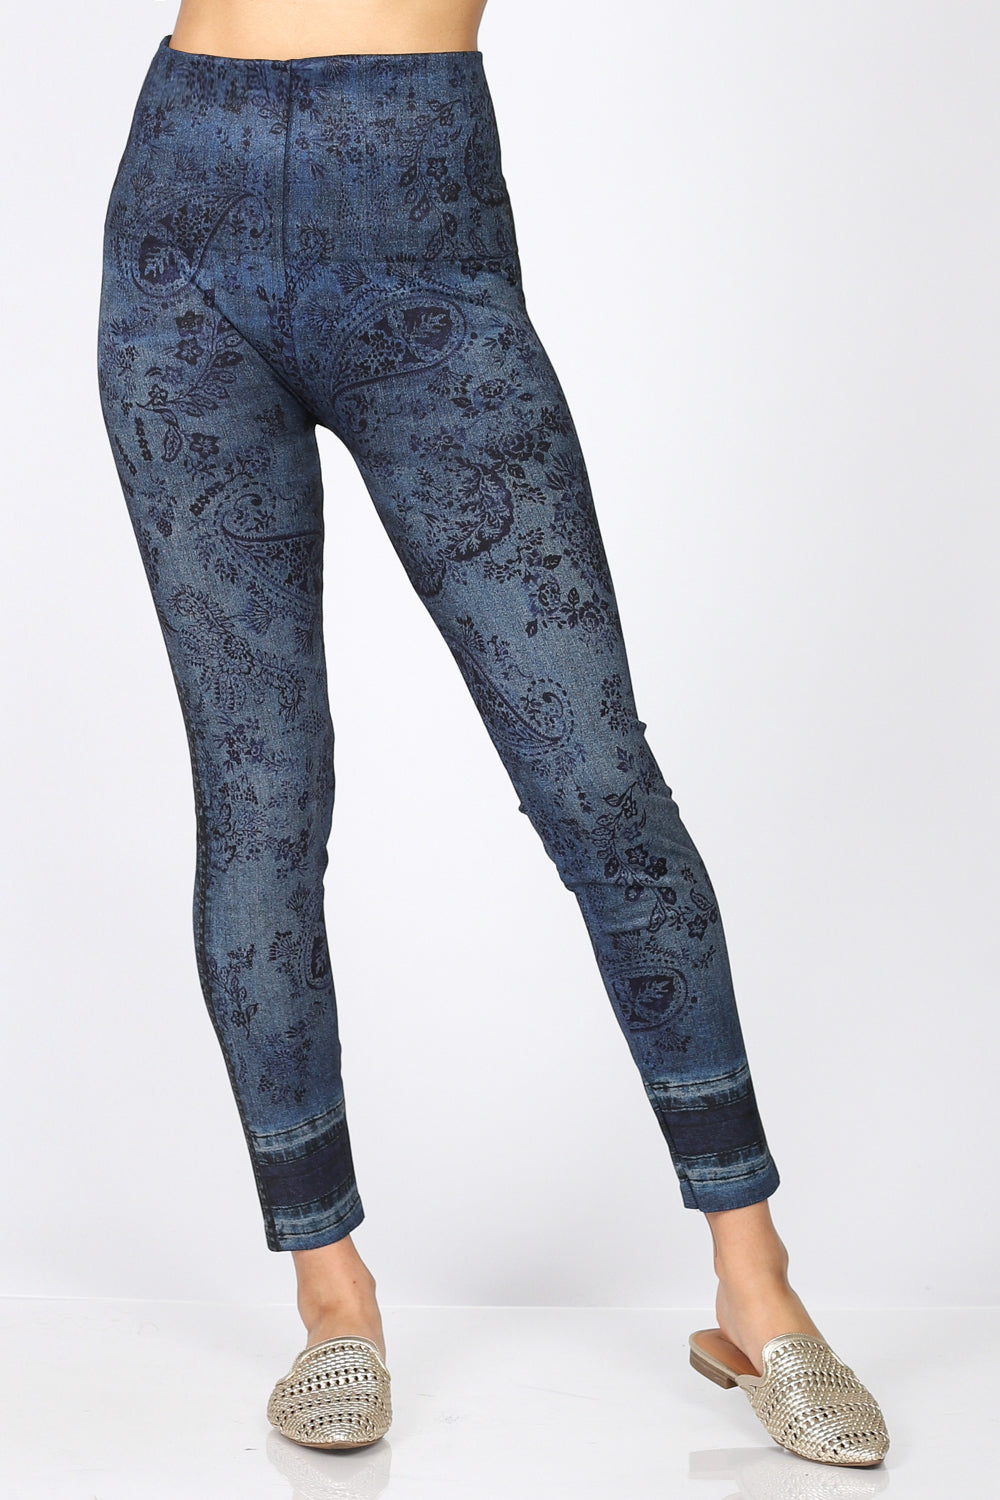 Women Leggings Size 2-12 Blue Paisley Print Tights Soft Stretchy Pants